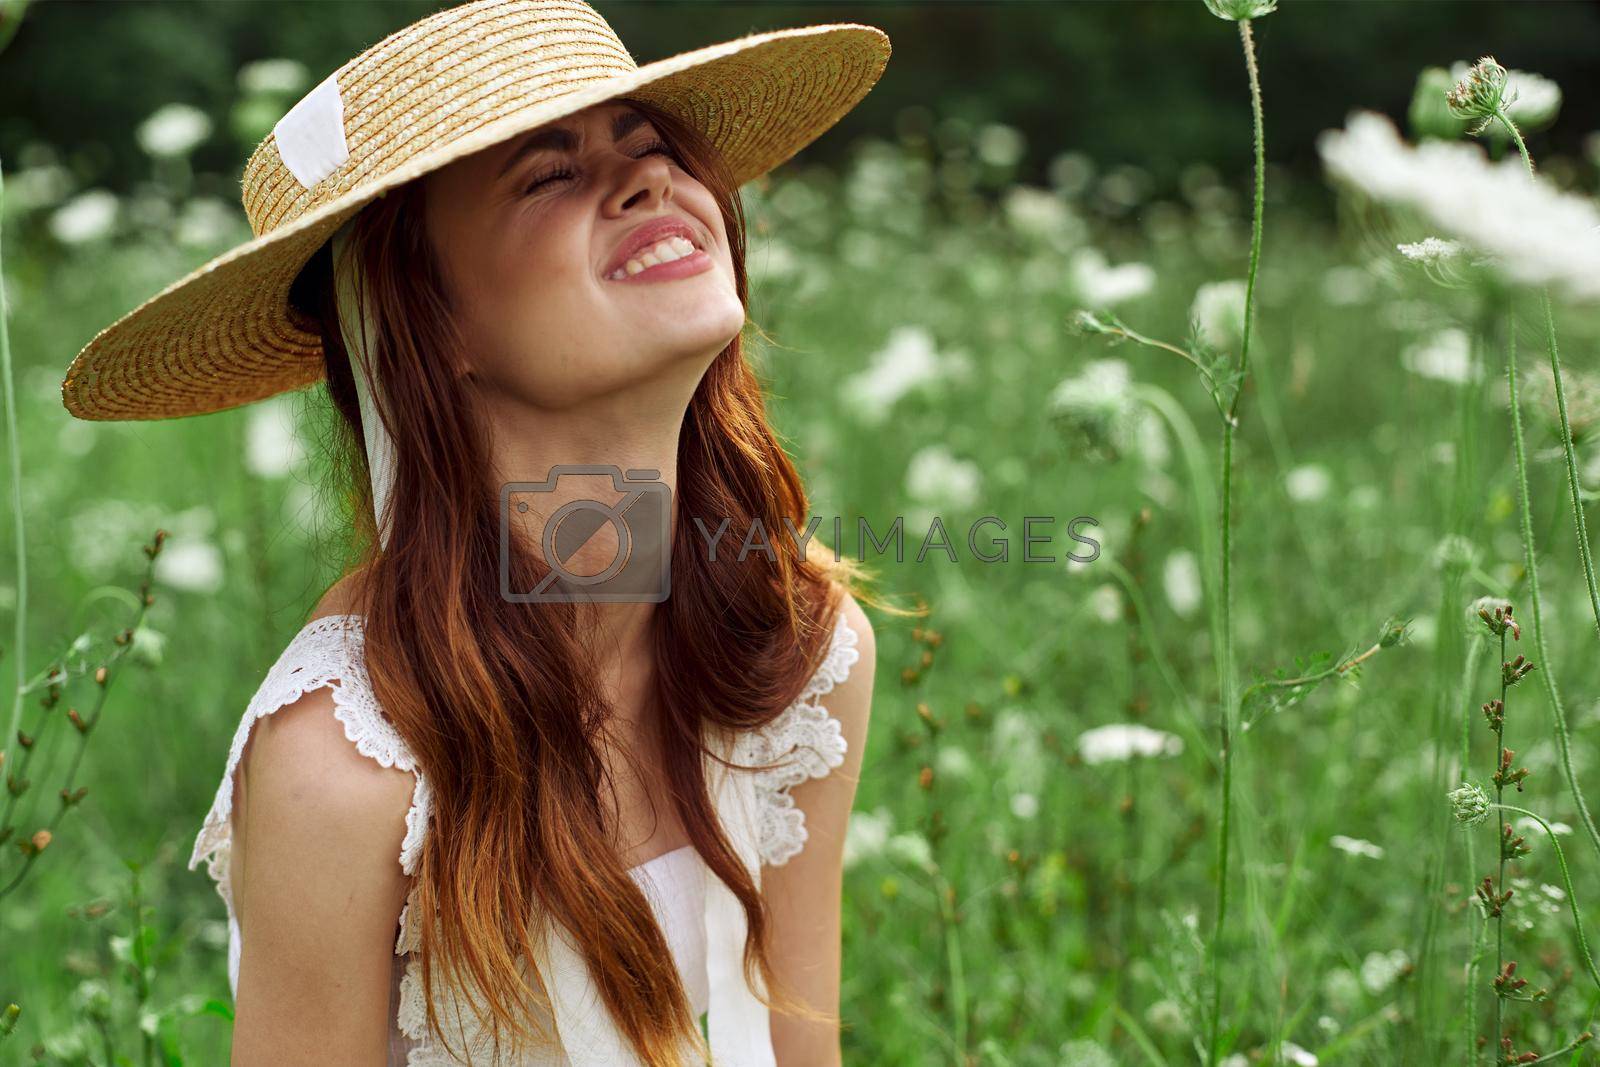 Cheerful woman nature flowers posing freedom fashion. High quality photo